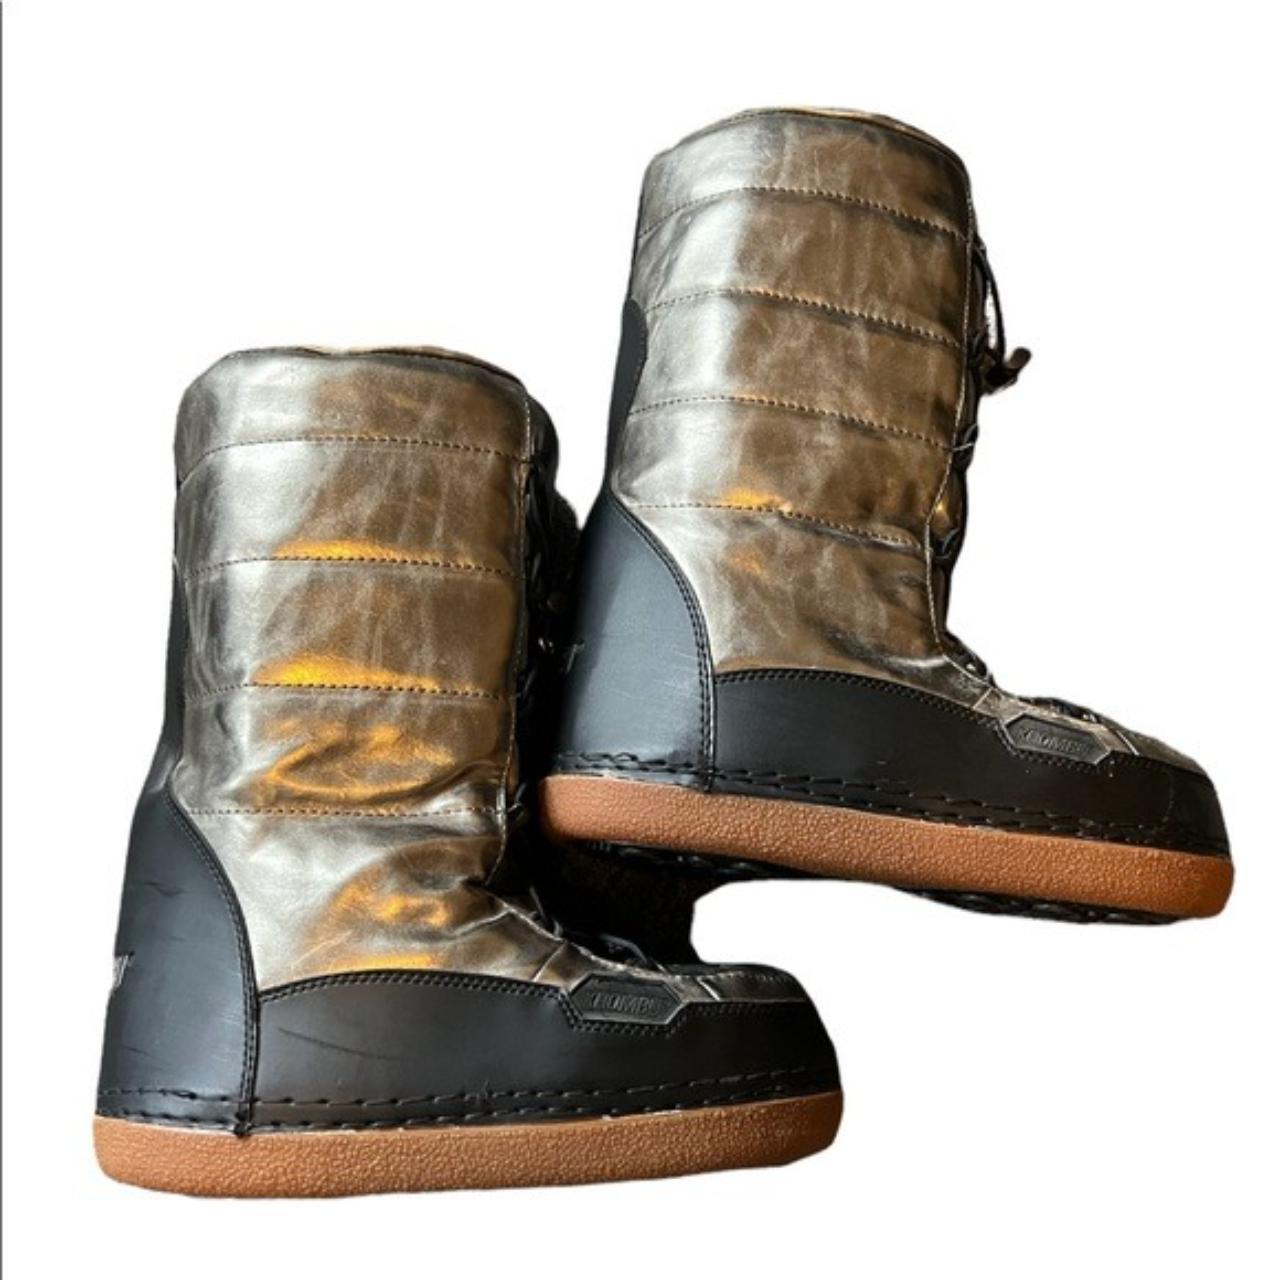 Khombu moon boots in size 39, metallic silver color.... - Depop